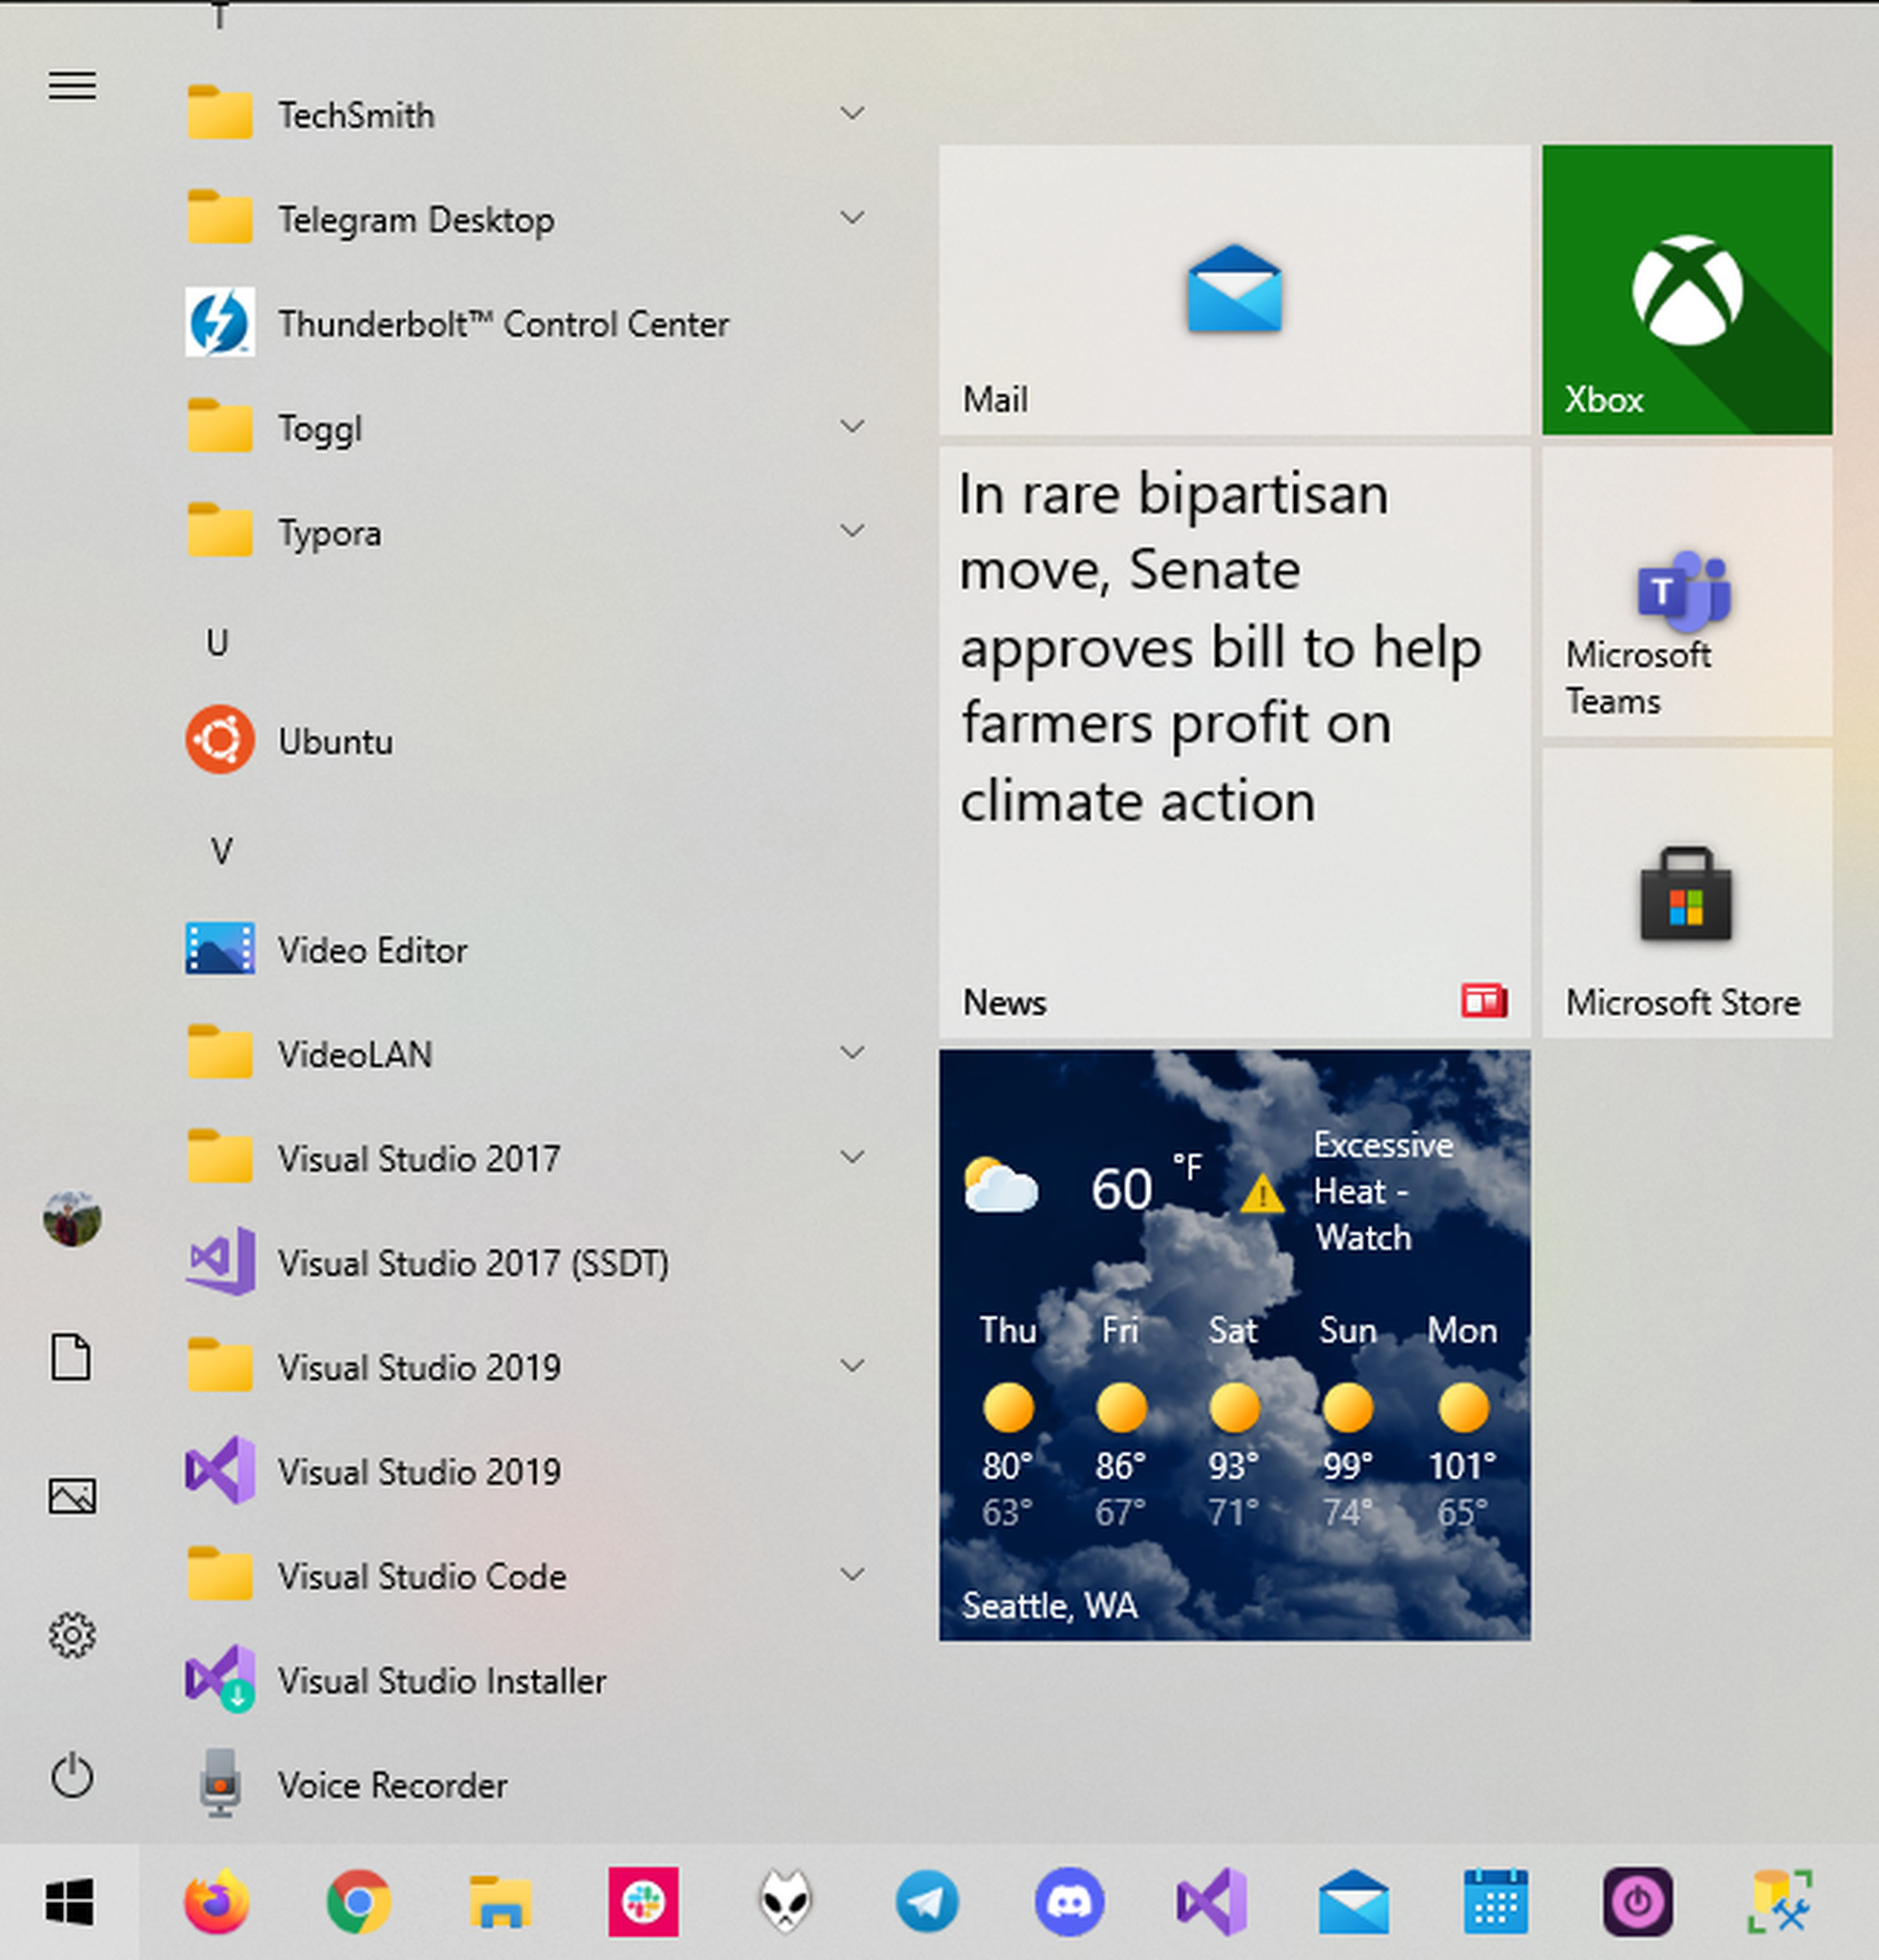 The Windows 10 Start menu.